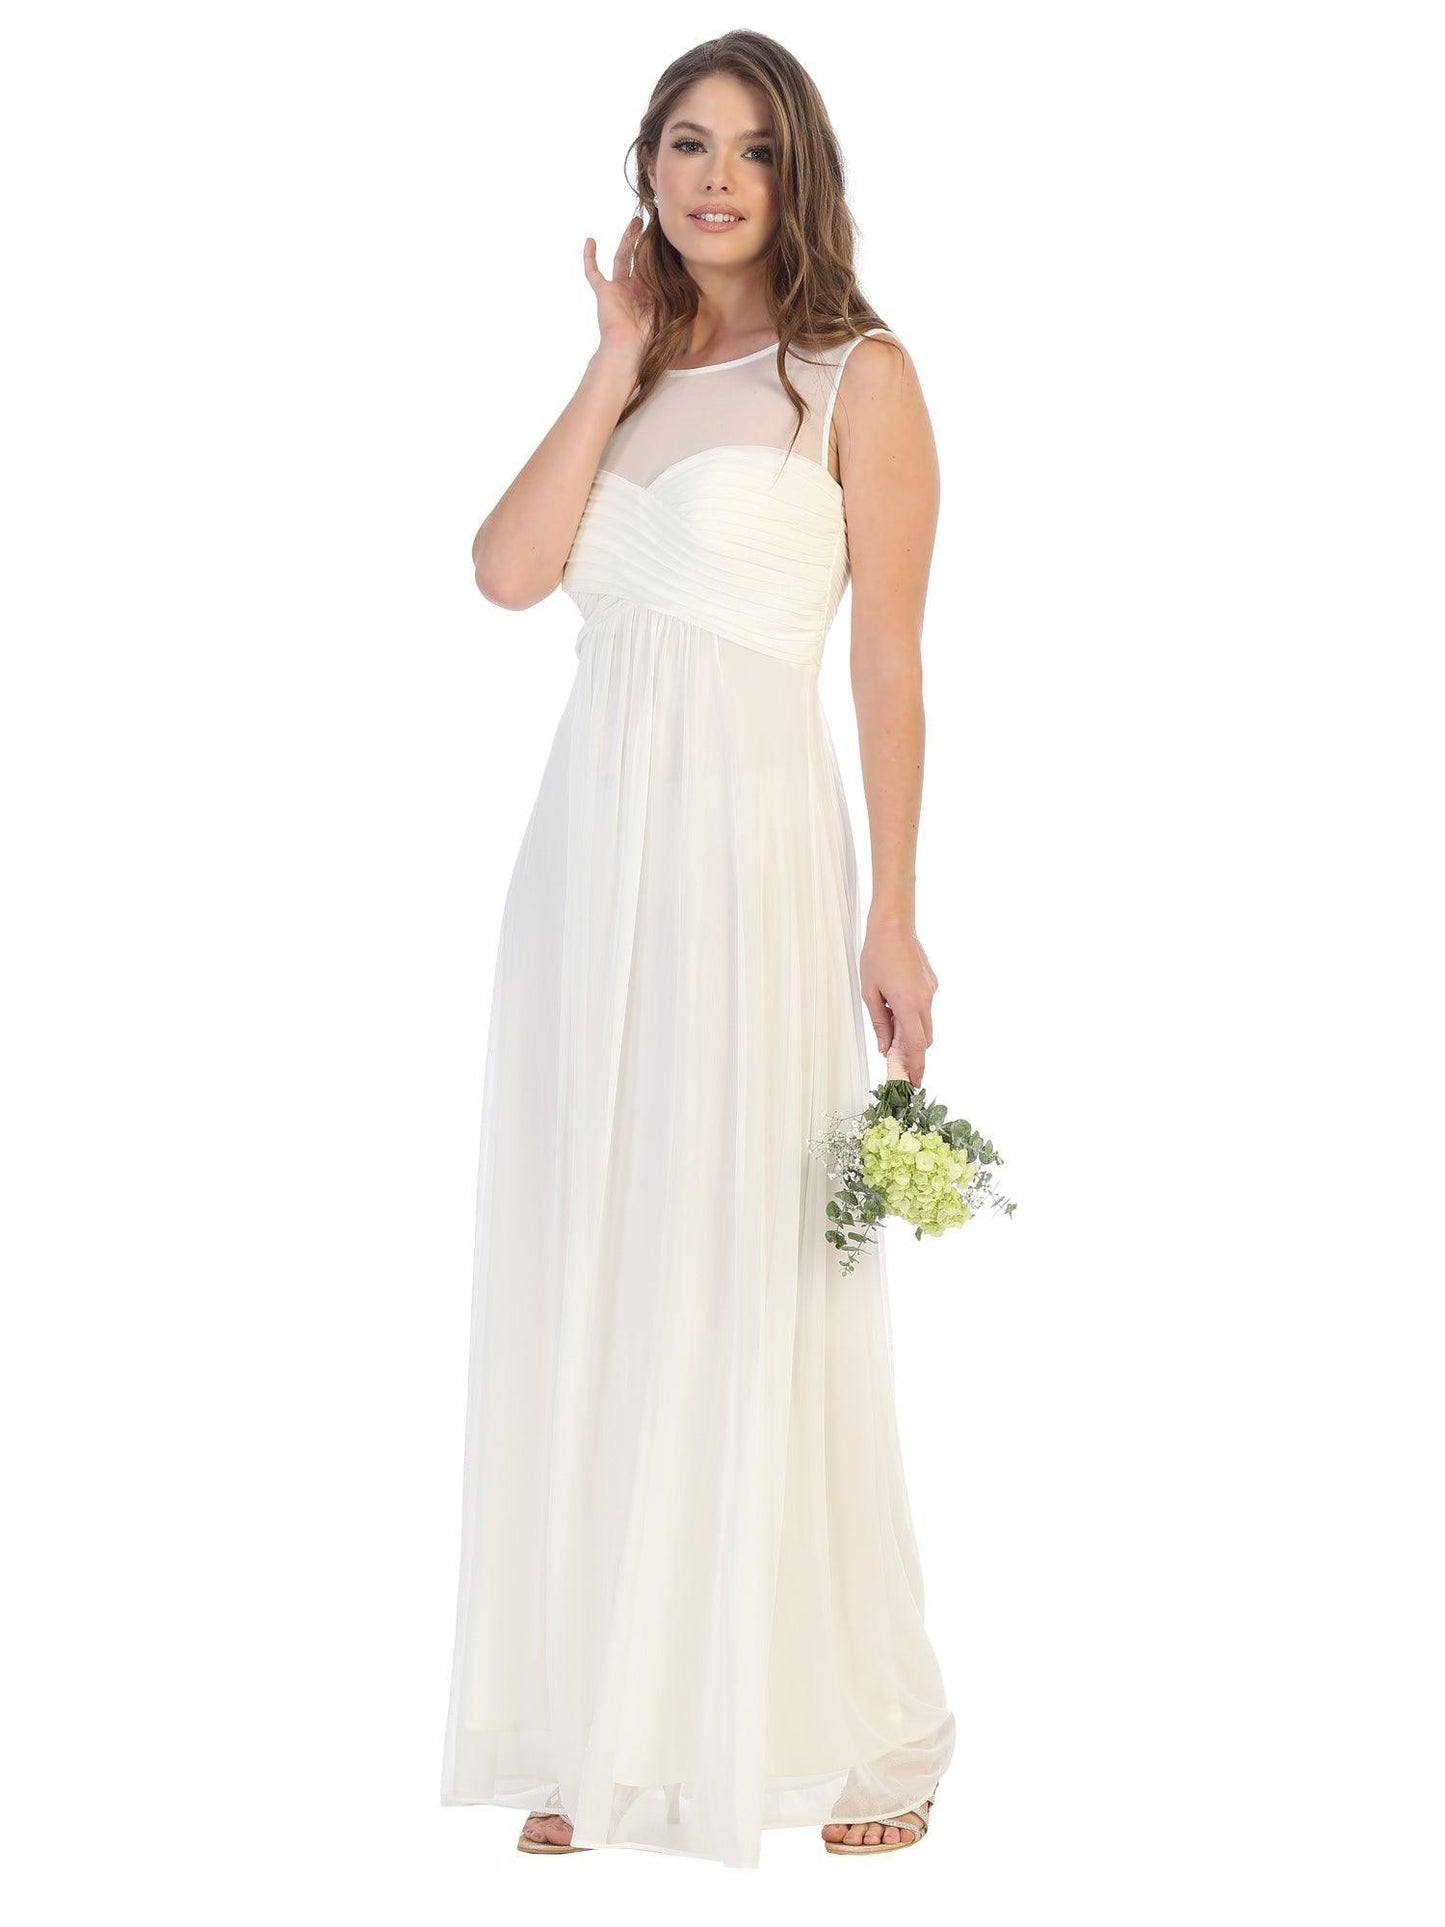 Long Sleeveless Bridesmaids Stretch Chiffon Dress - The Dress Outlet